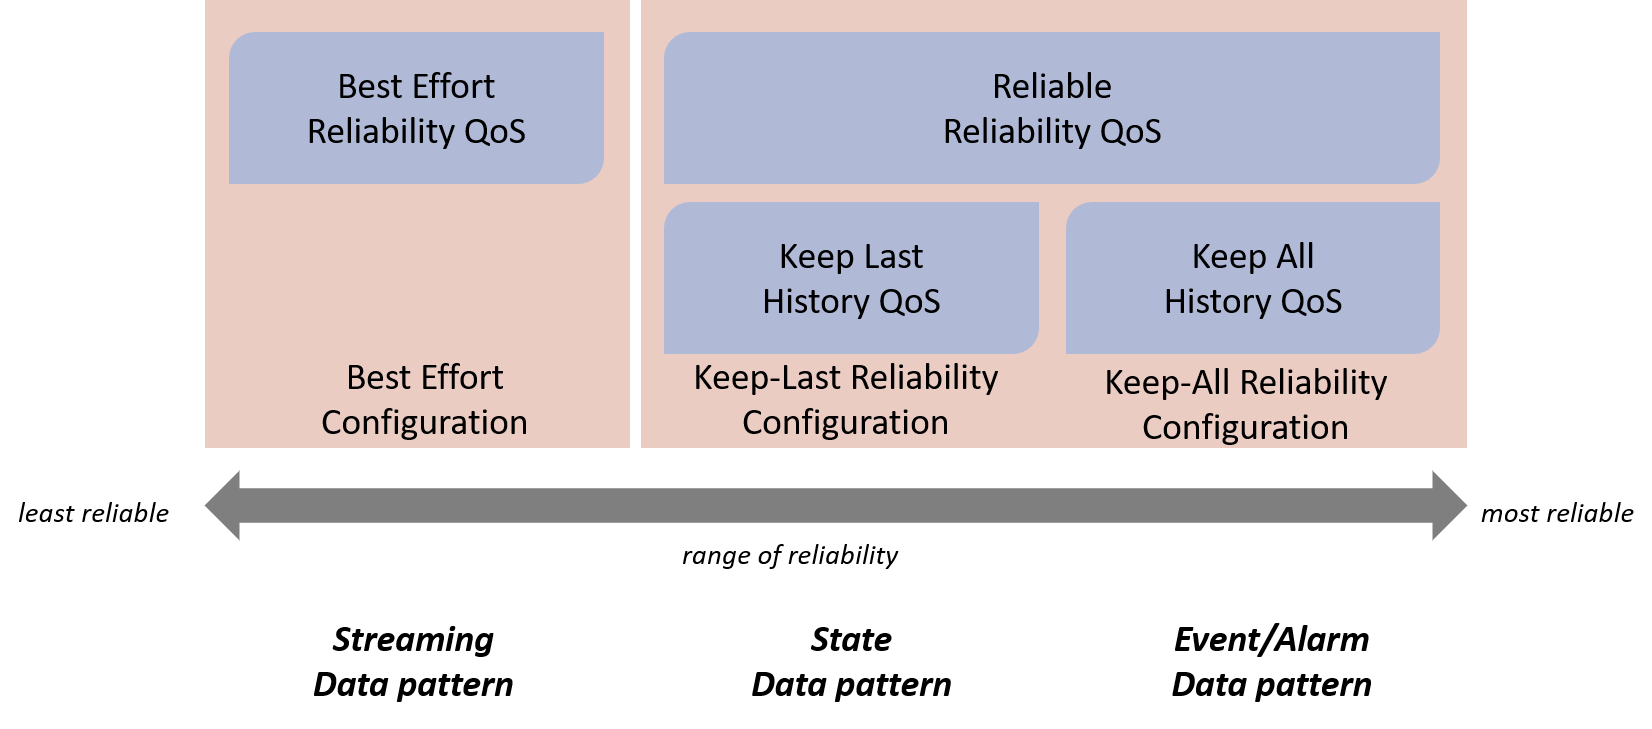 Reliability Range, Summary